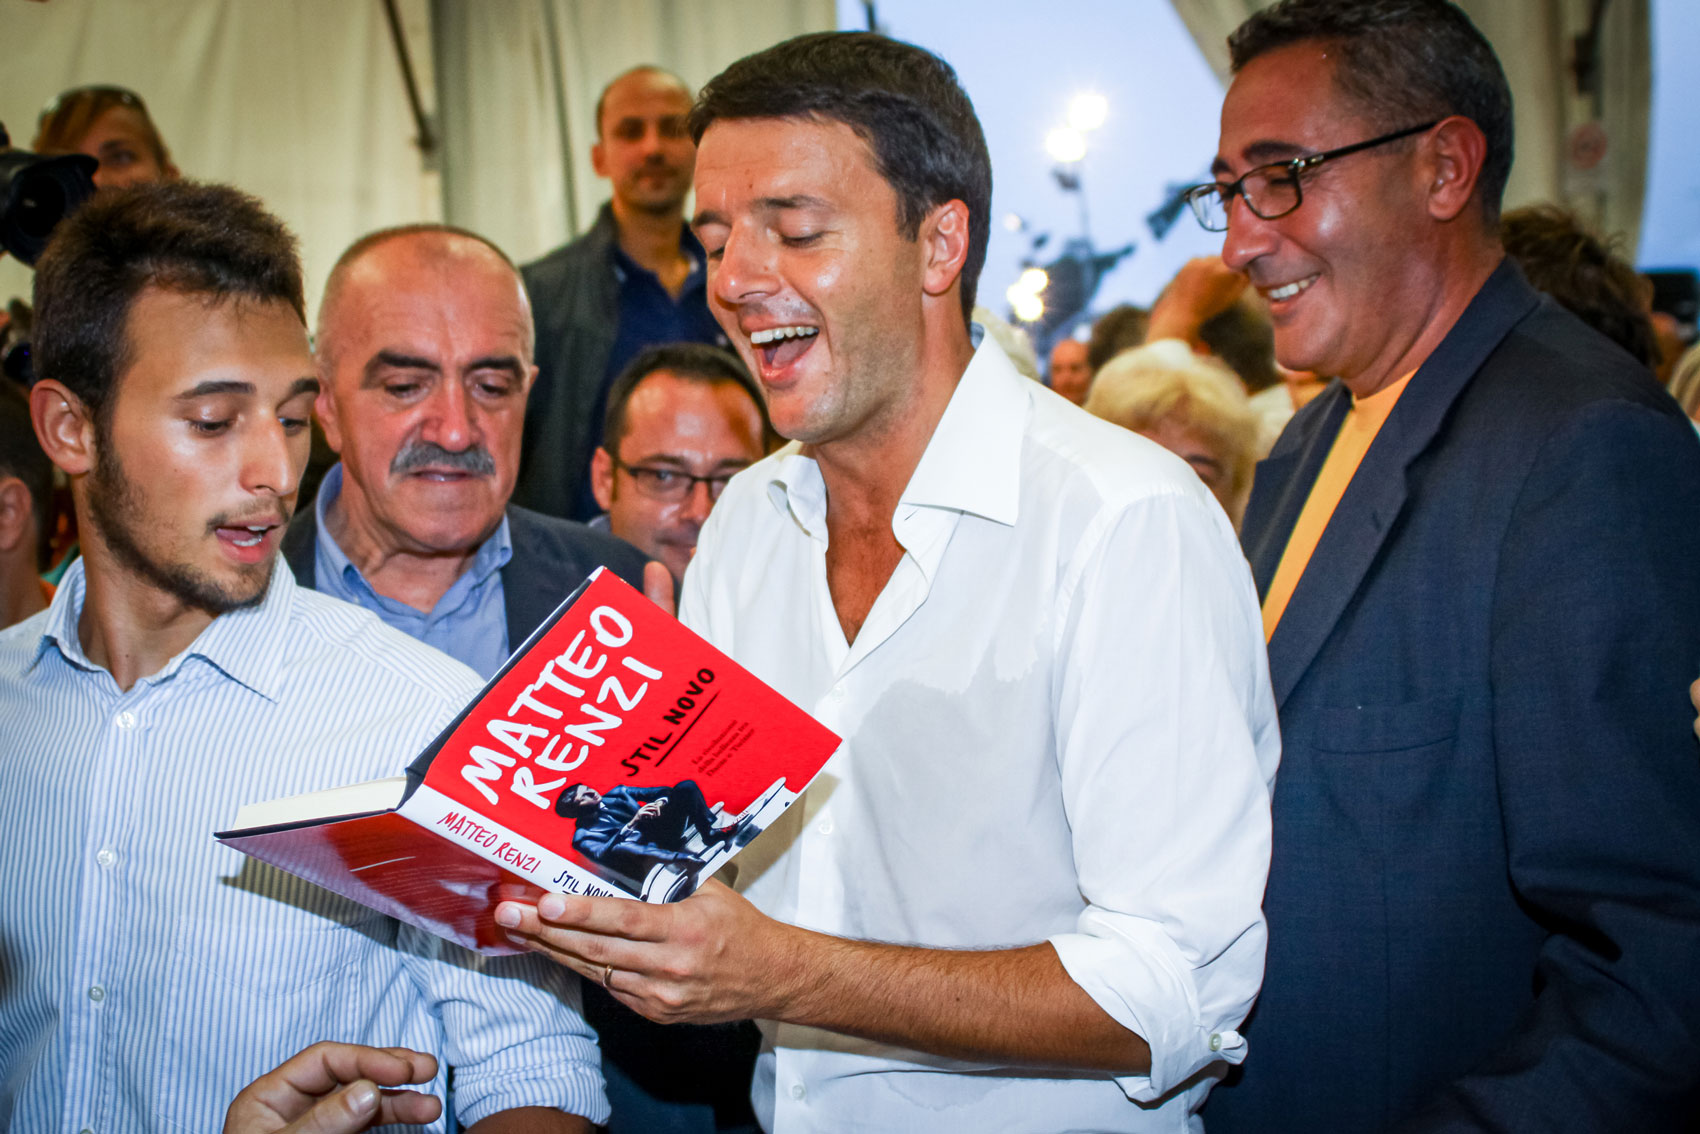 Event shooting - Portrait Matteo Renzi, Italienische Minister Präsident - Event Fotografie in München